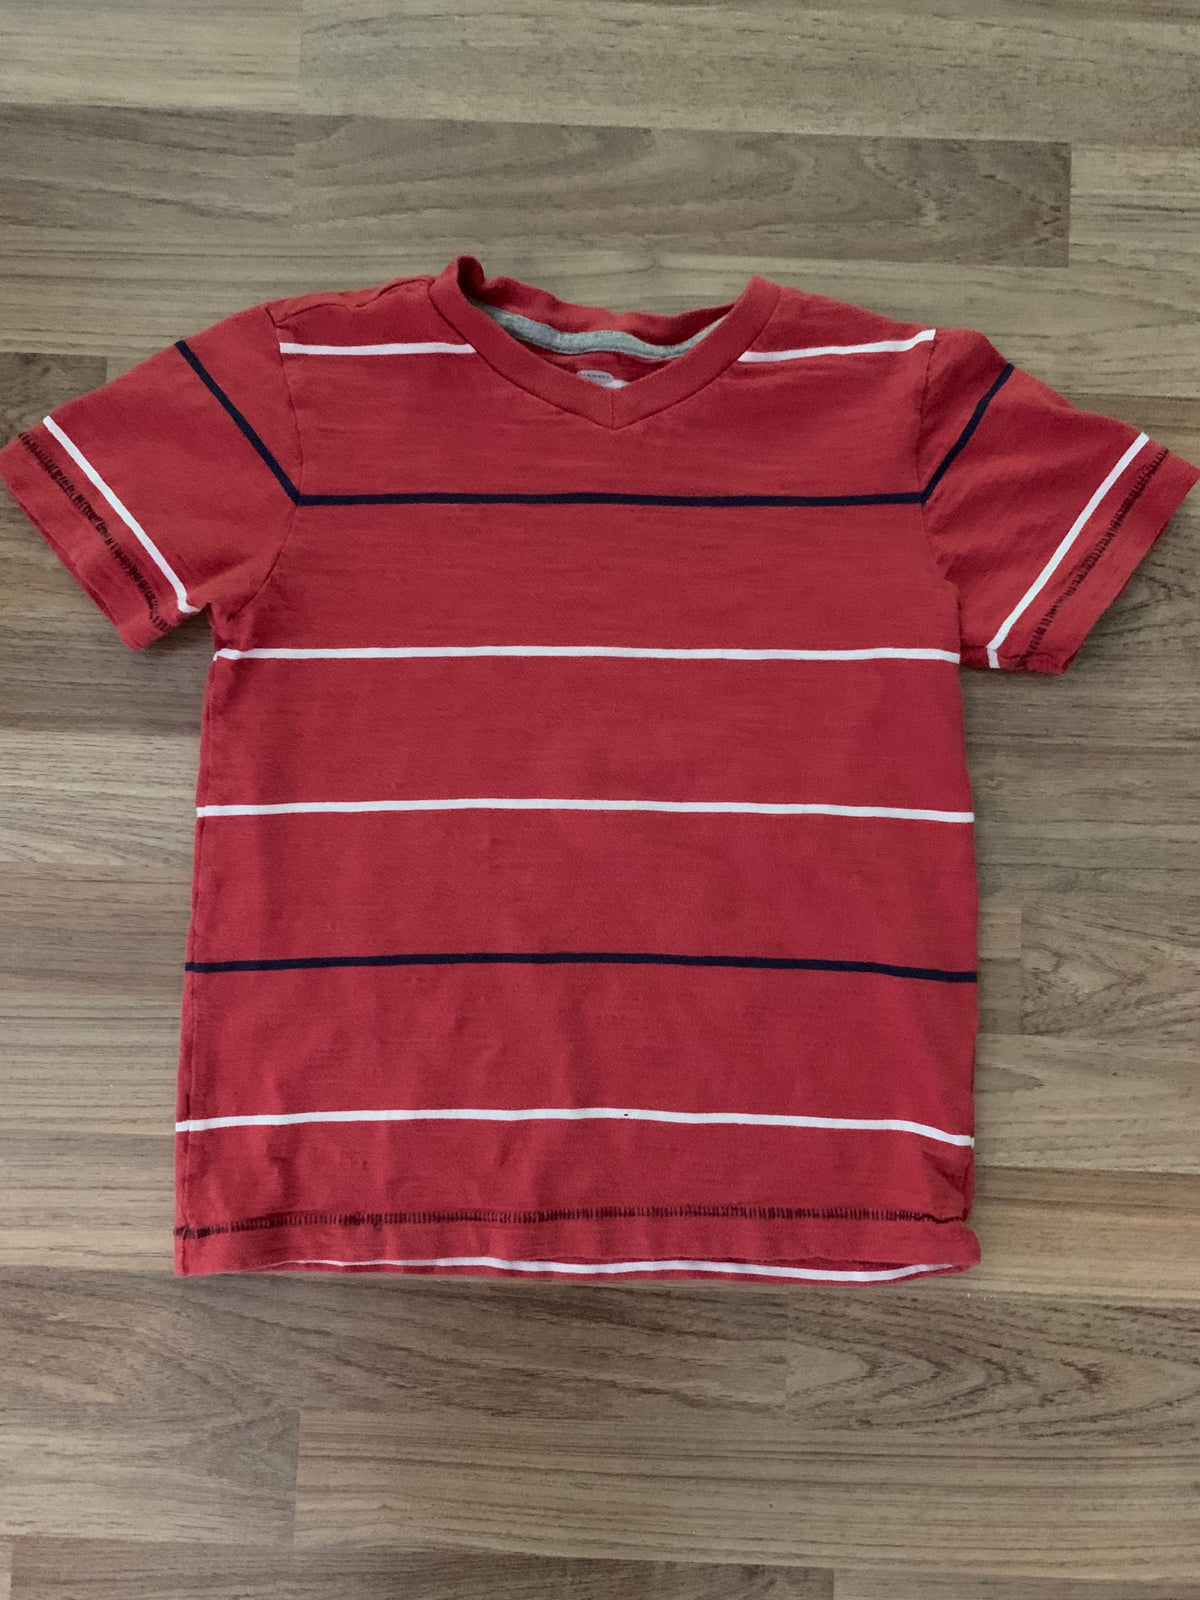 Short Sleeve Striped Top (Boys Size 6-7)